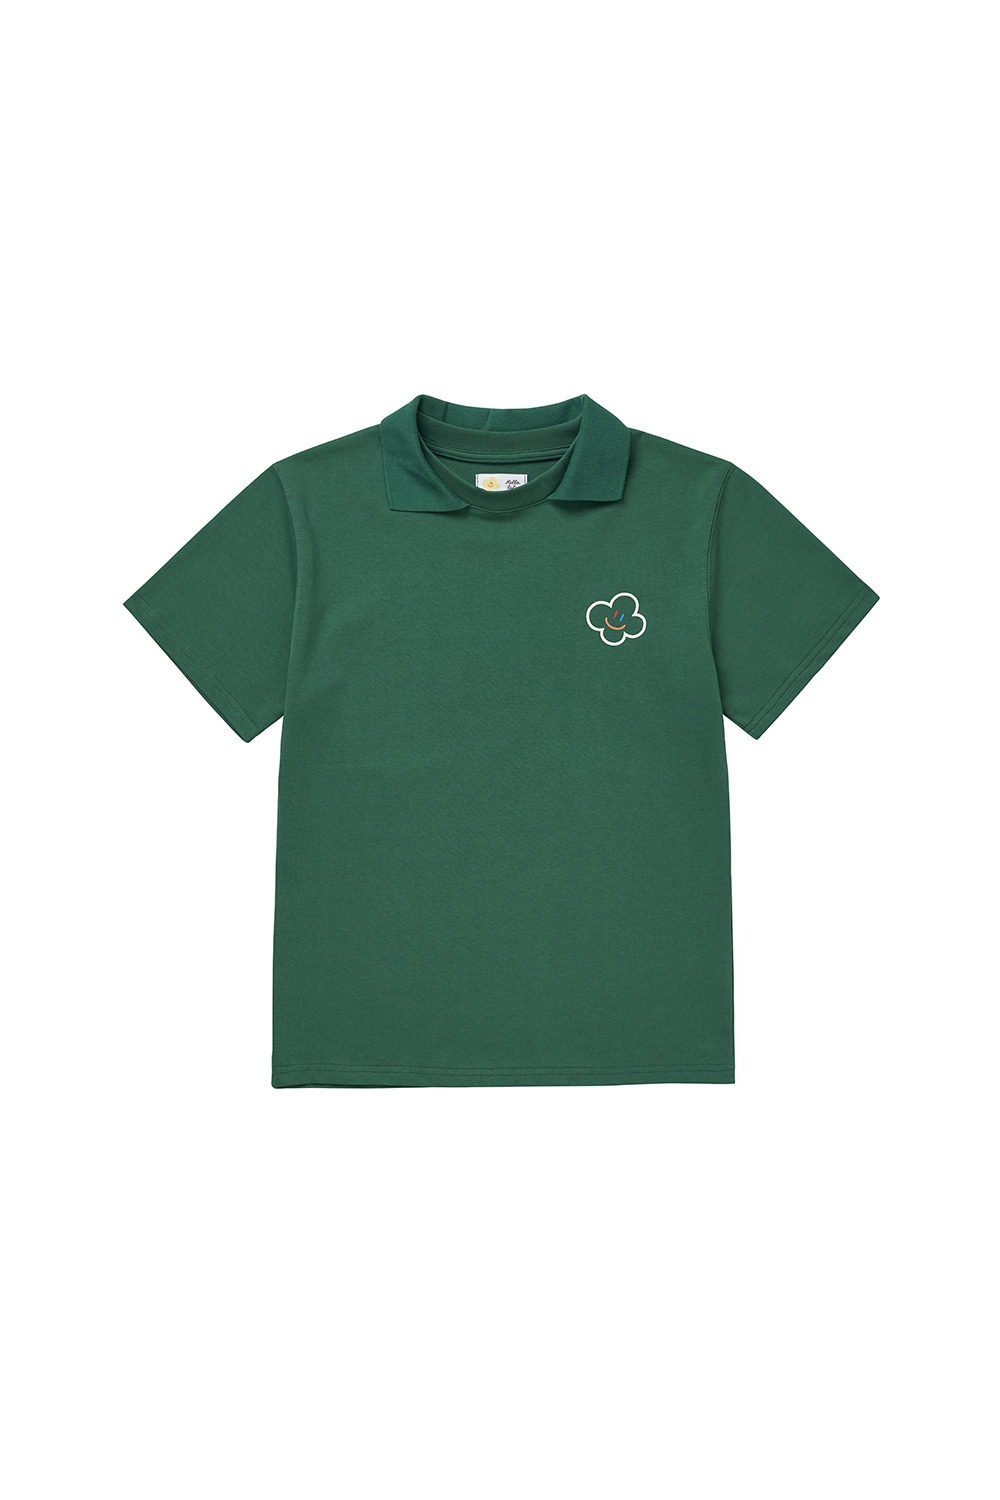 Hello LaLa New PK T-Shirts [Green]